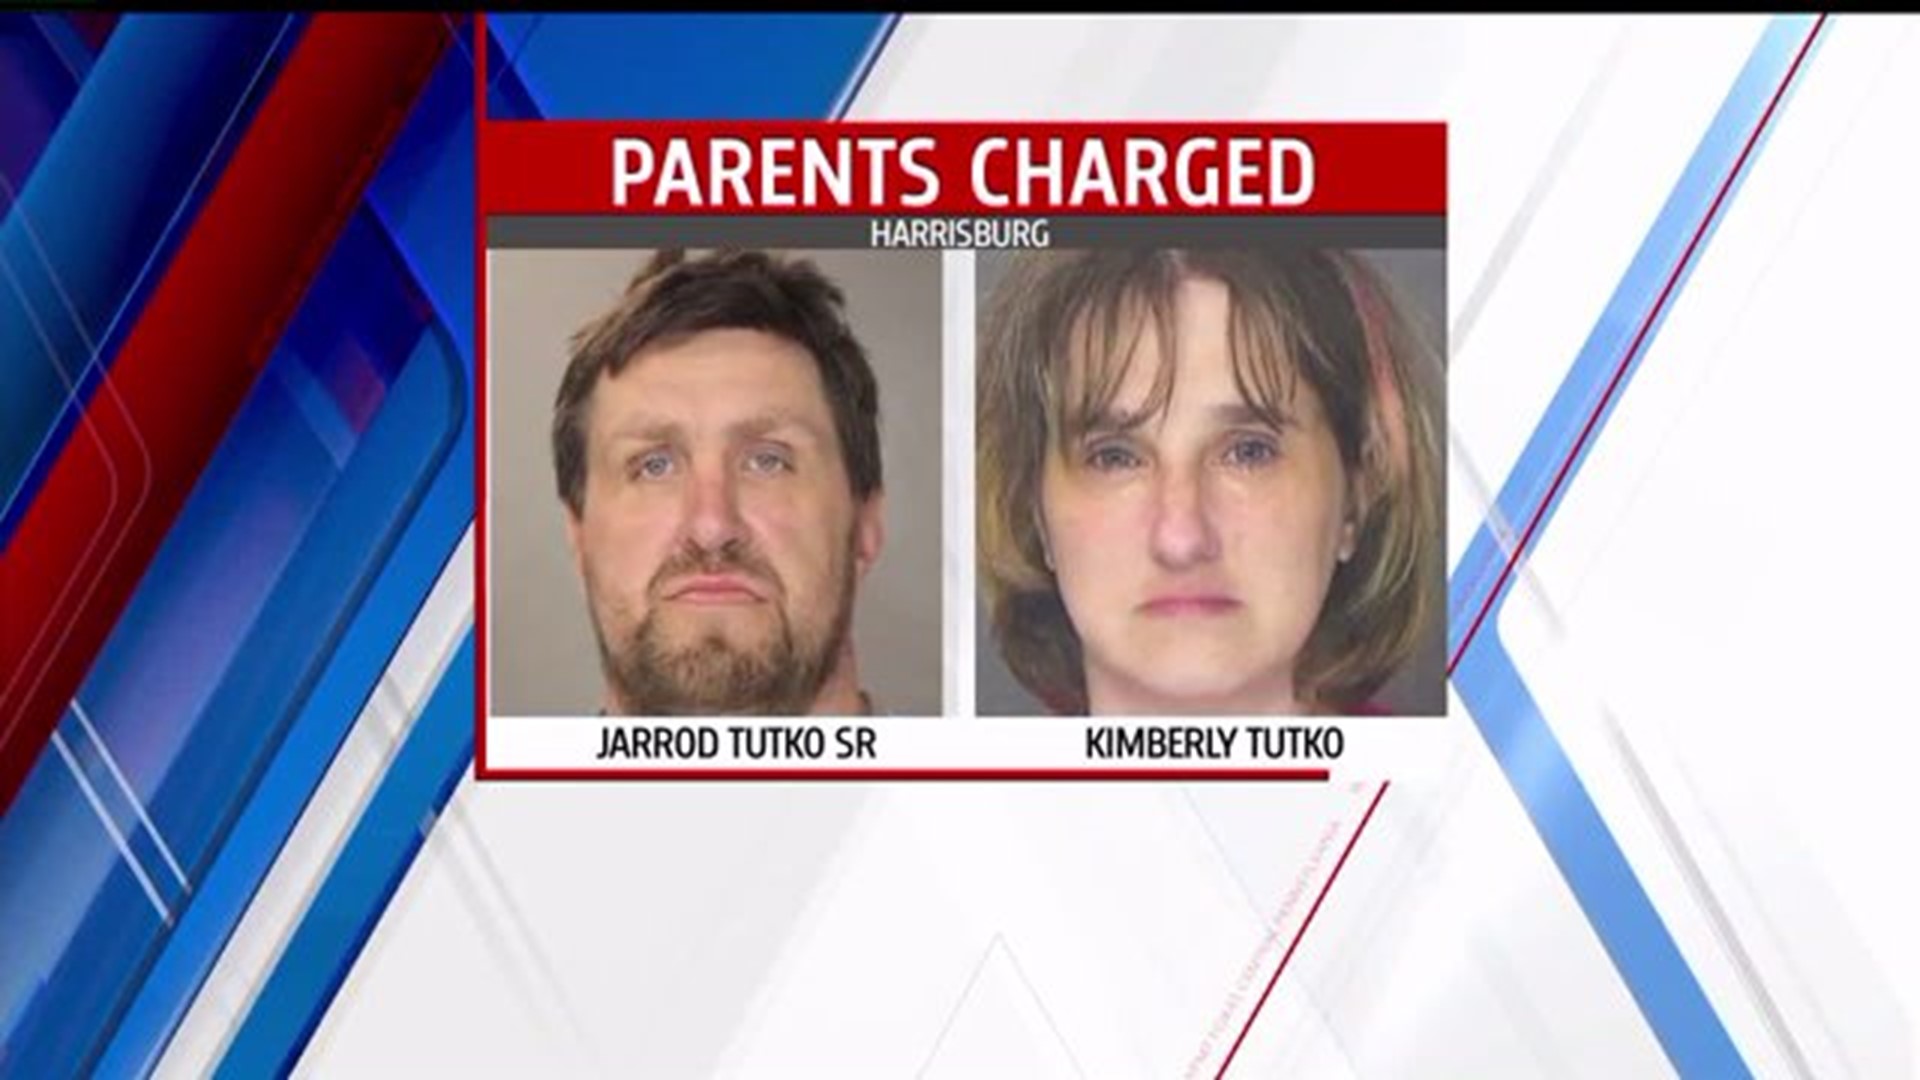 Parents of Jarrod Tutko, Jr. set to appear in court, both charged with criminal homicide